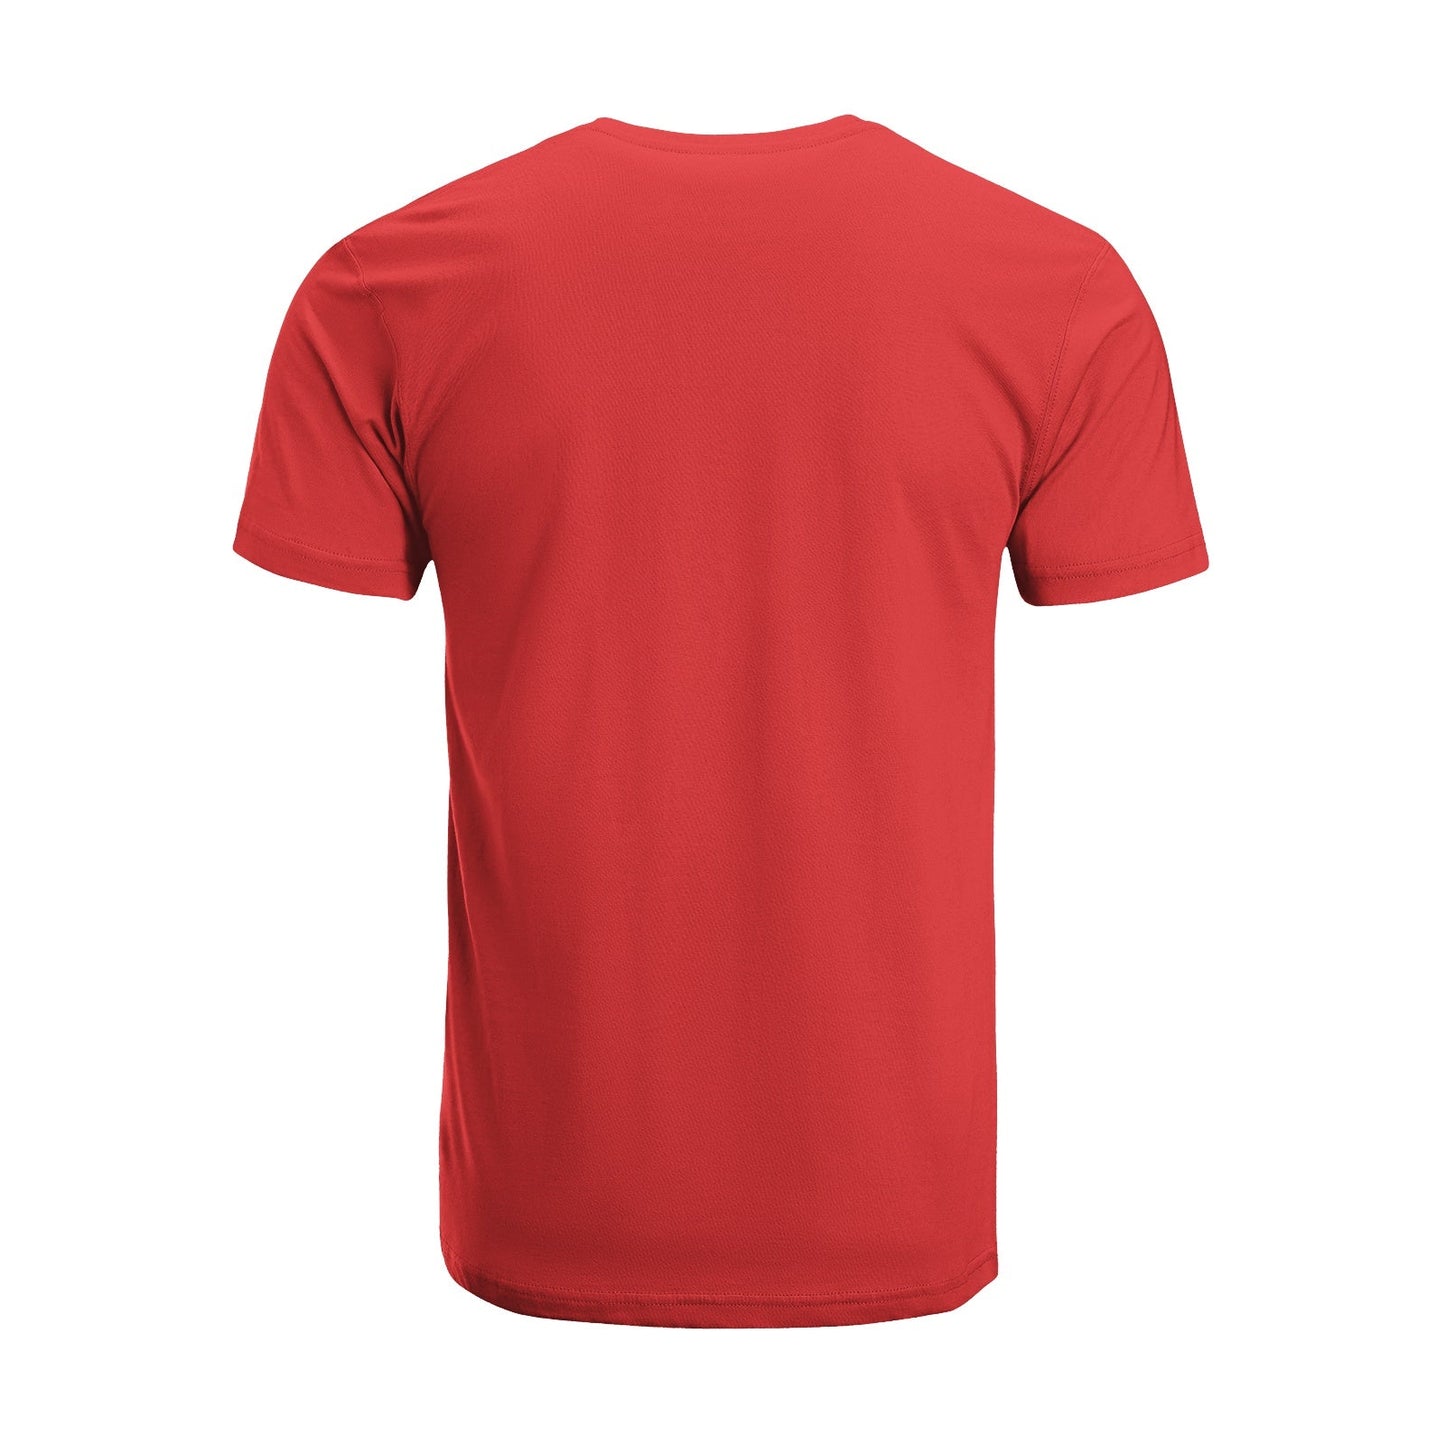 Unisex Short Sleeve Crew Neck Cotton Jersey T-Shirt MOM 06